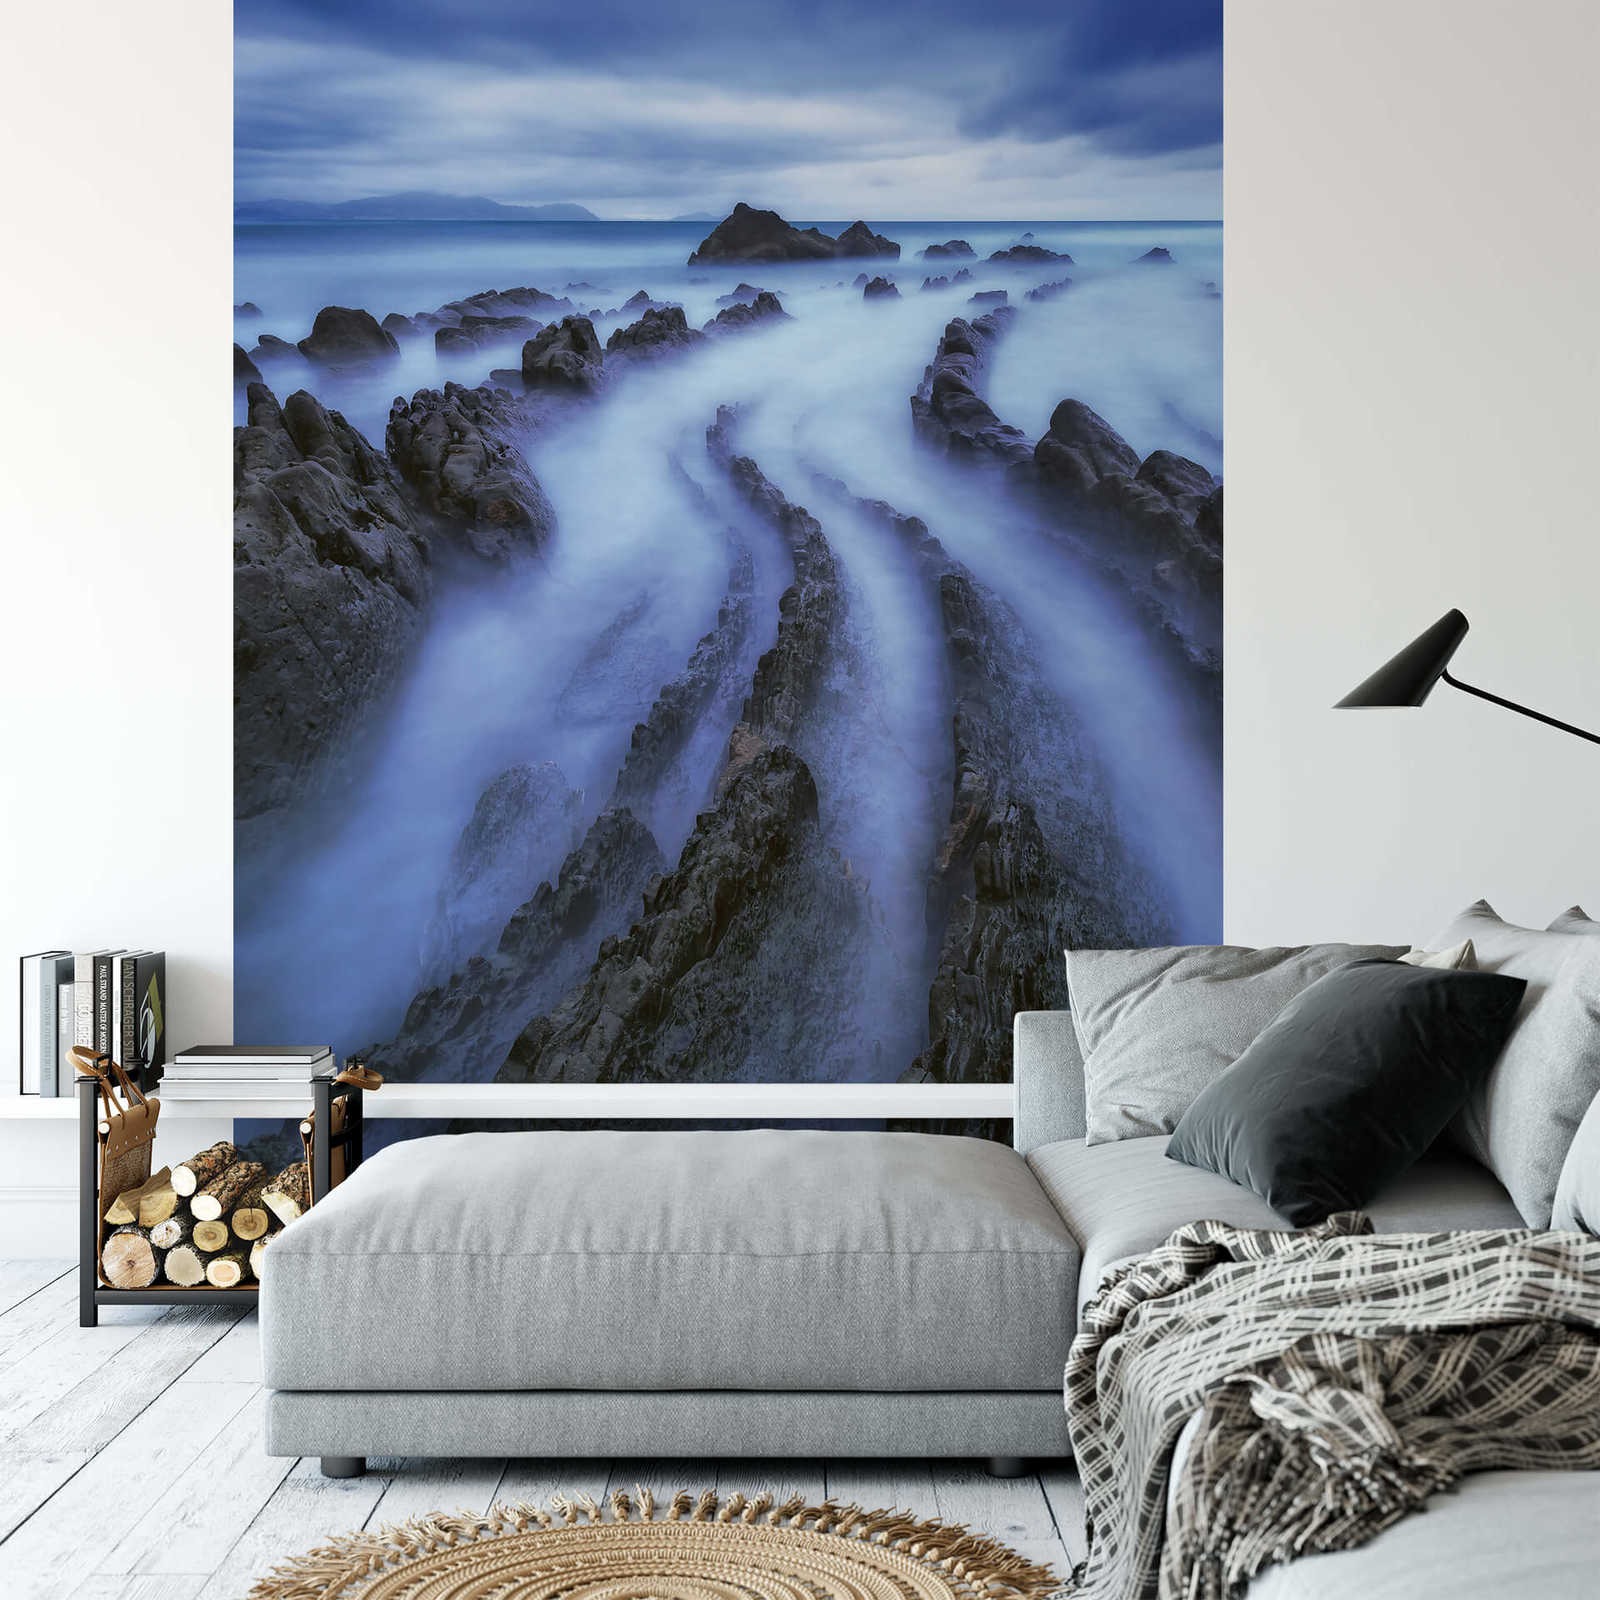             Photo wallpaper landscape fog on sea - blue, grey
        